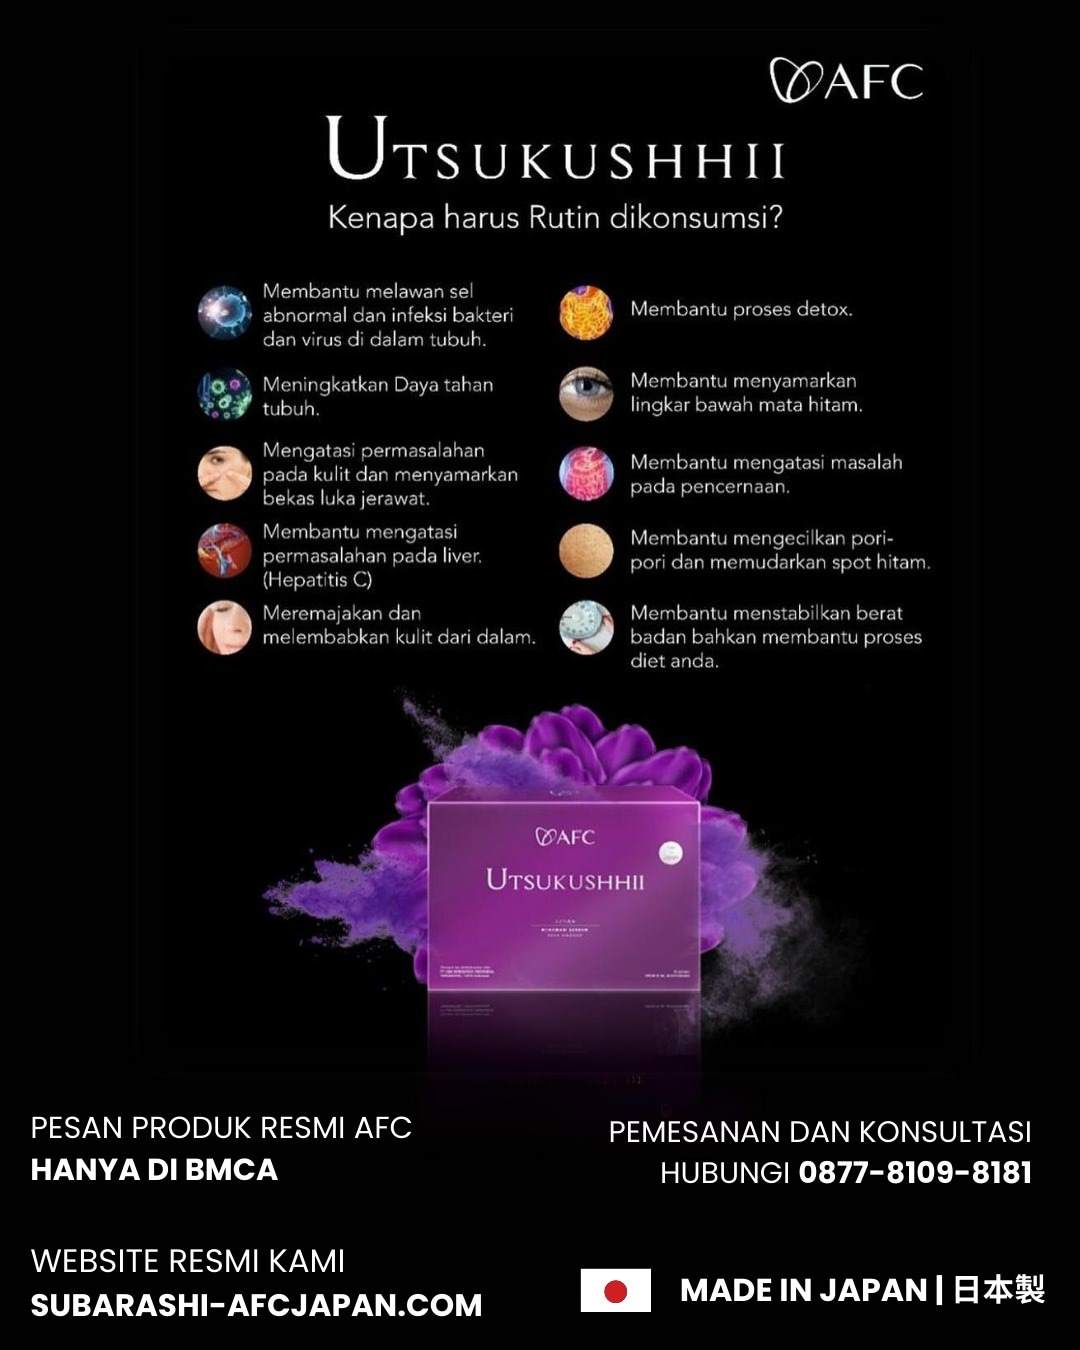 Utsukushhii Gold Version Produk Triple Probiotic Pertama di Indonesia